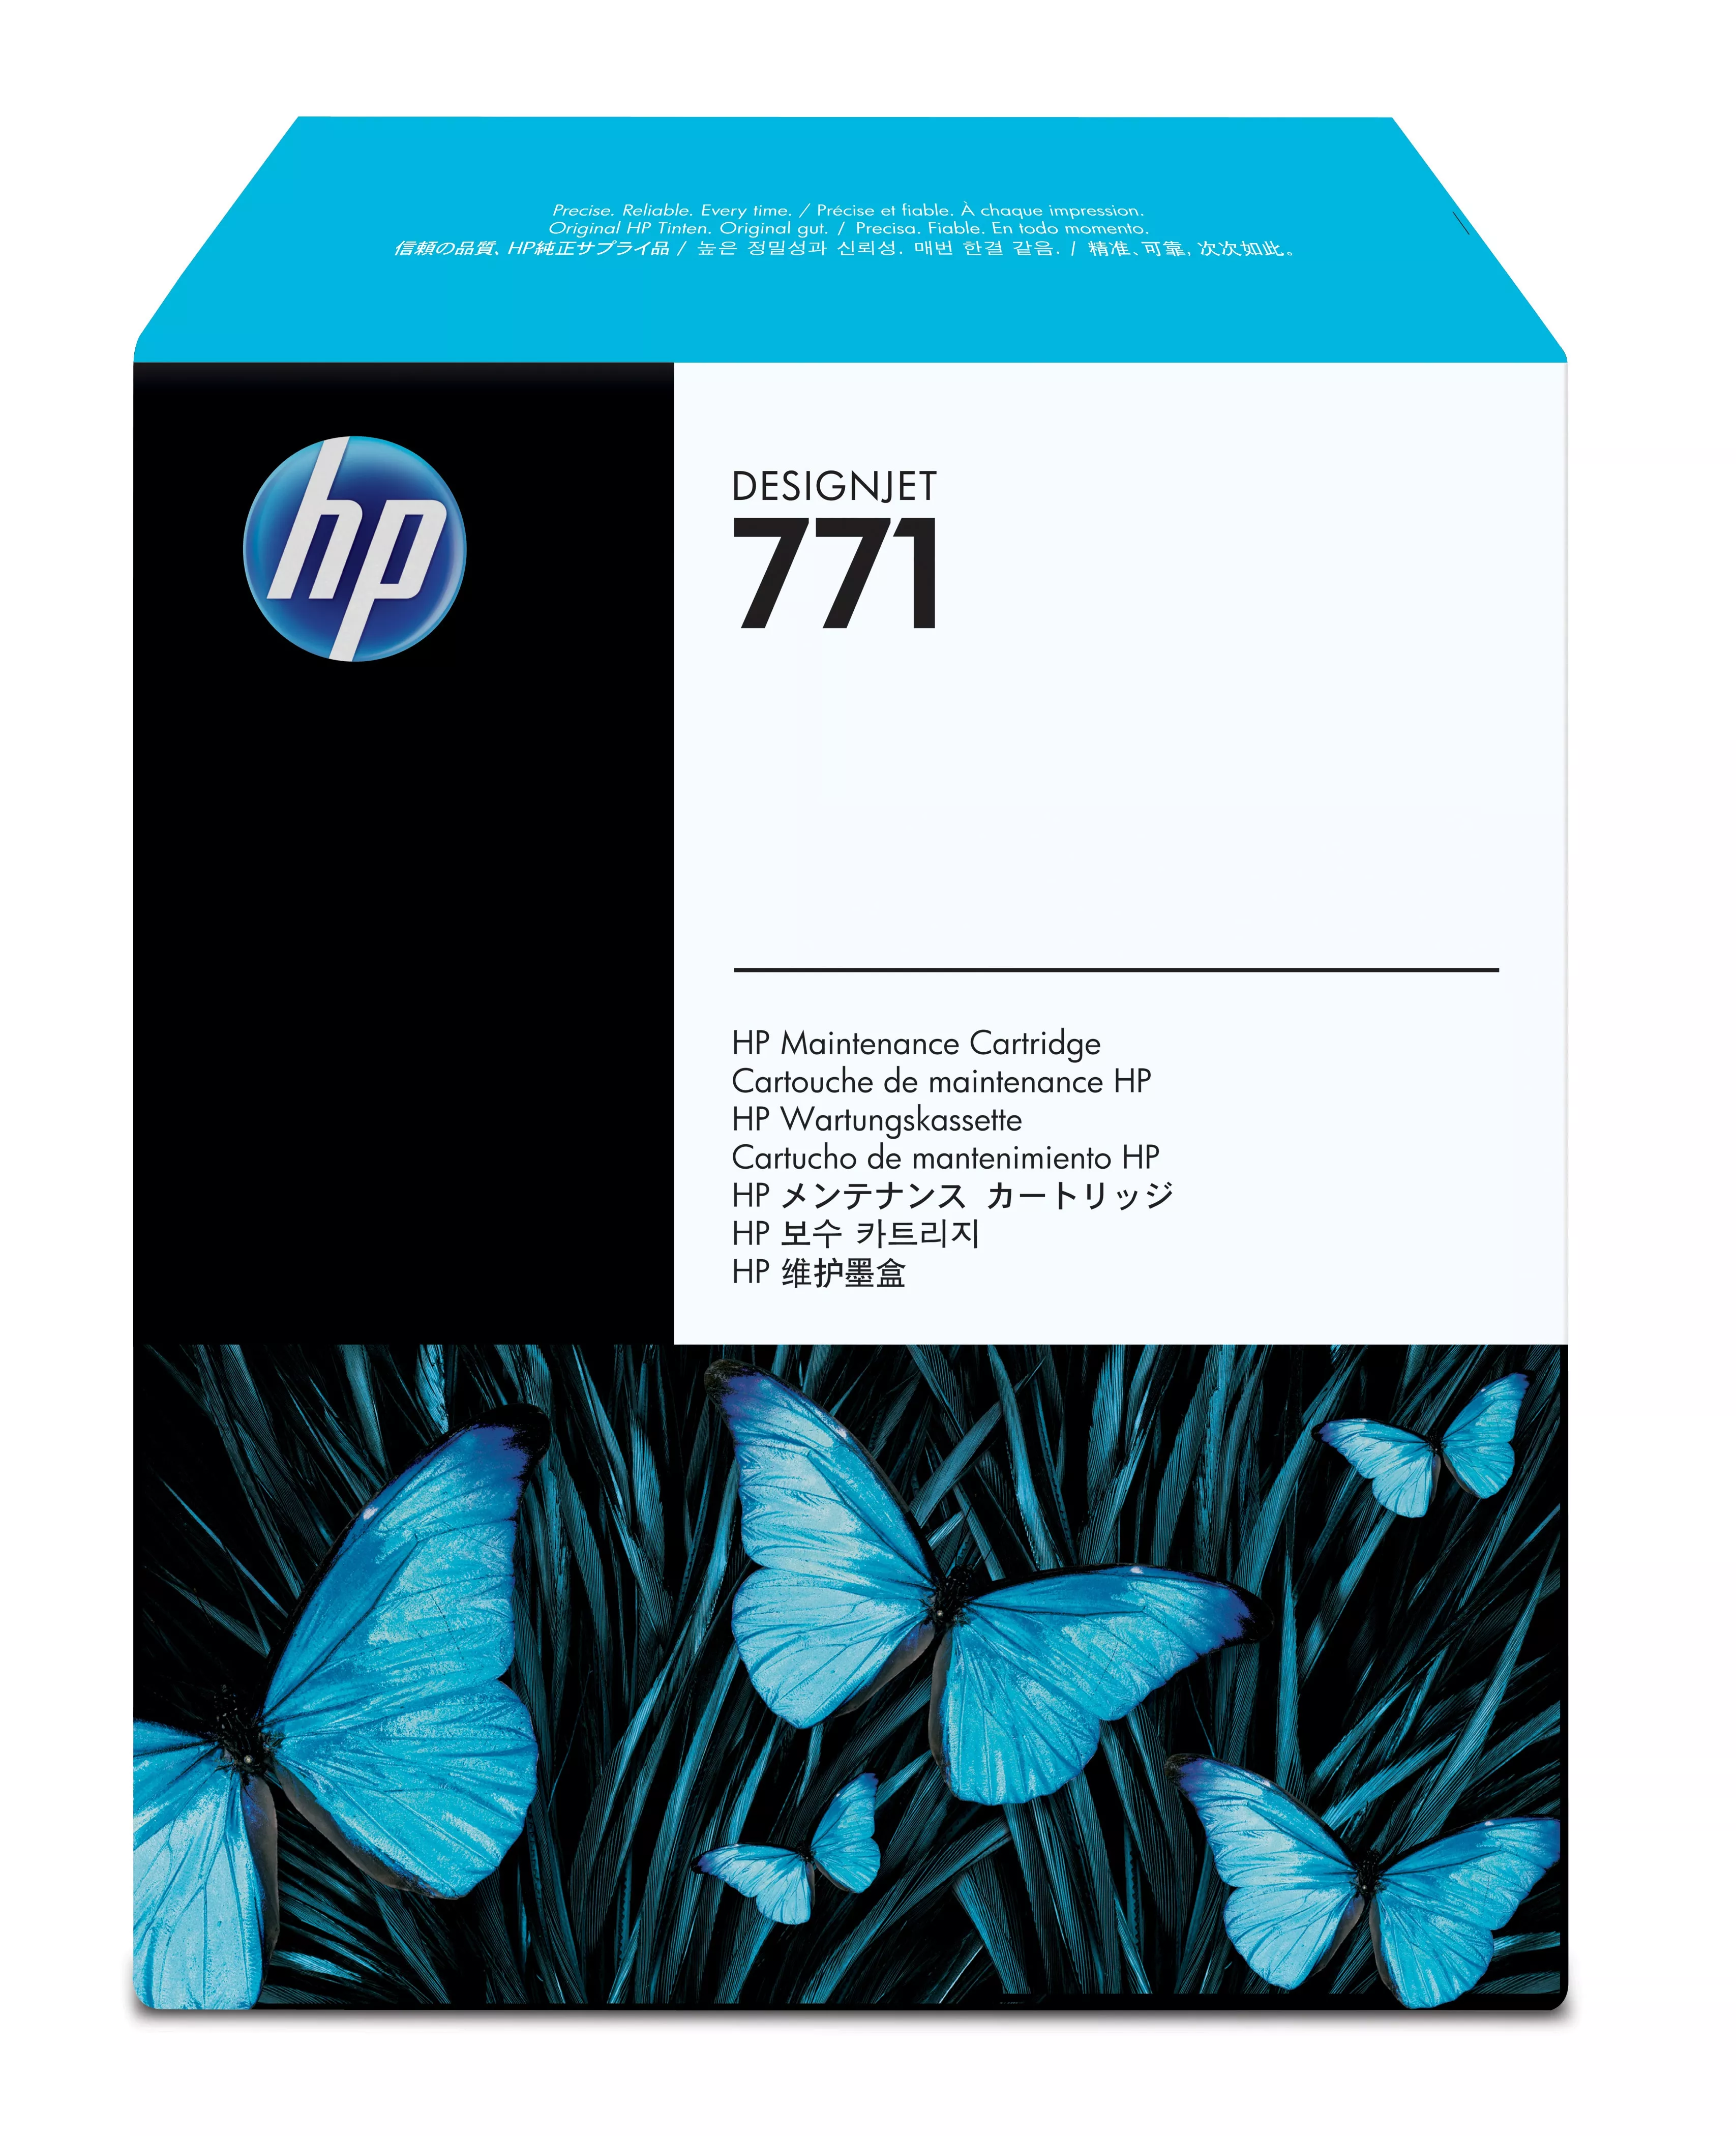 Achat HP 771 original maintenance cartridge CH644A au meilleur prix